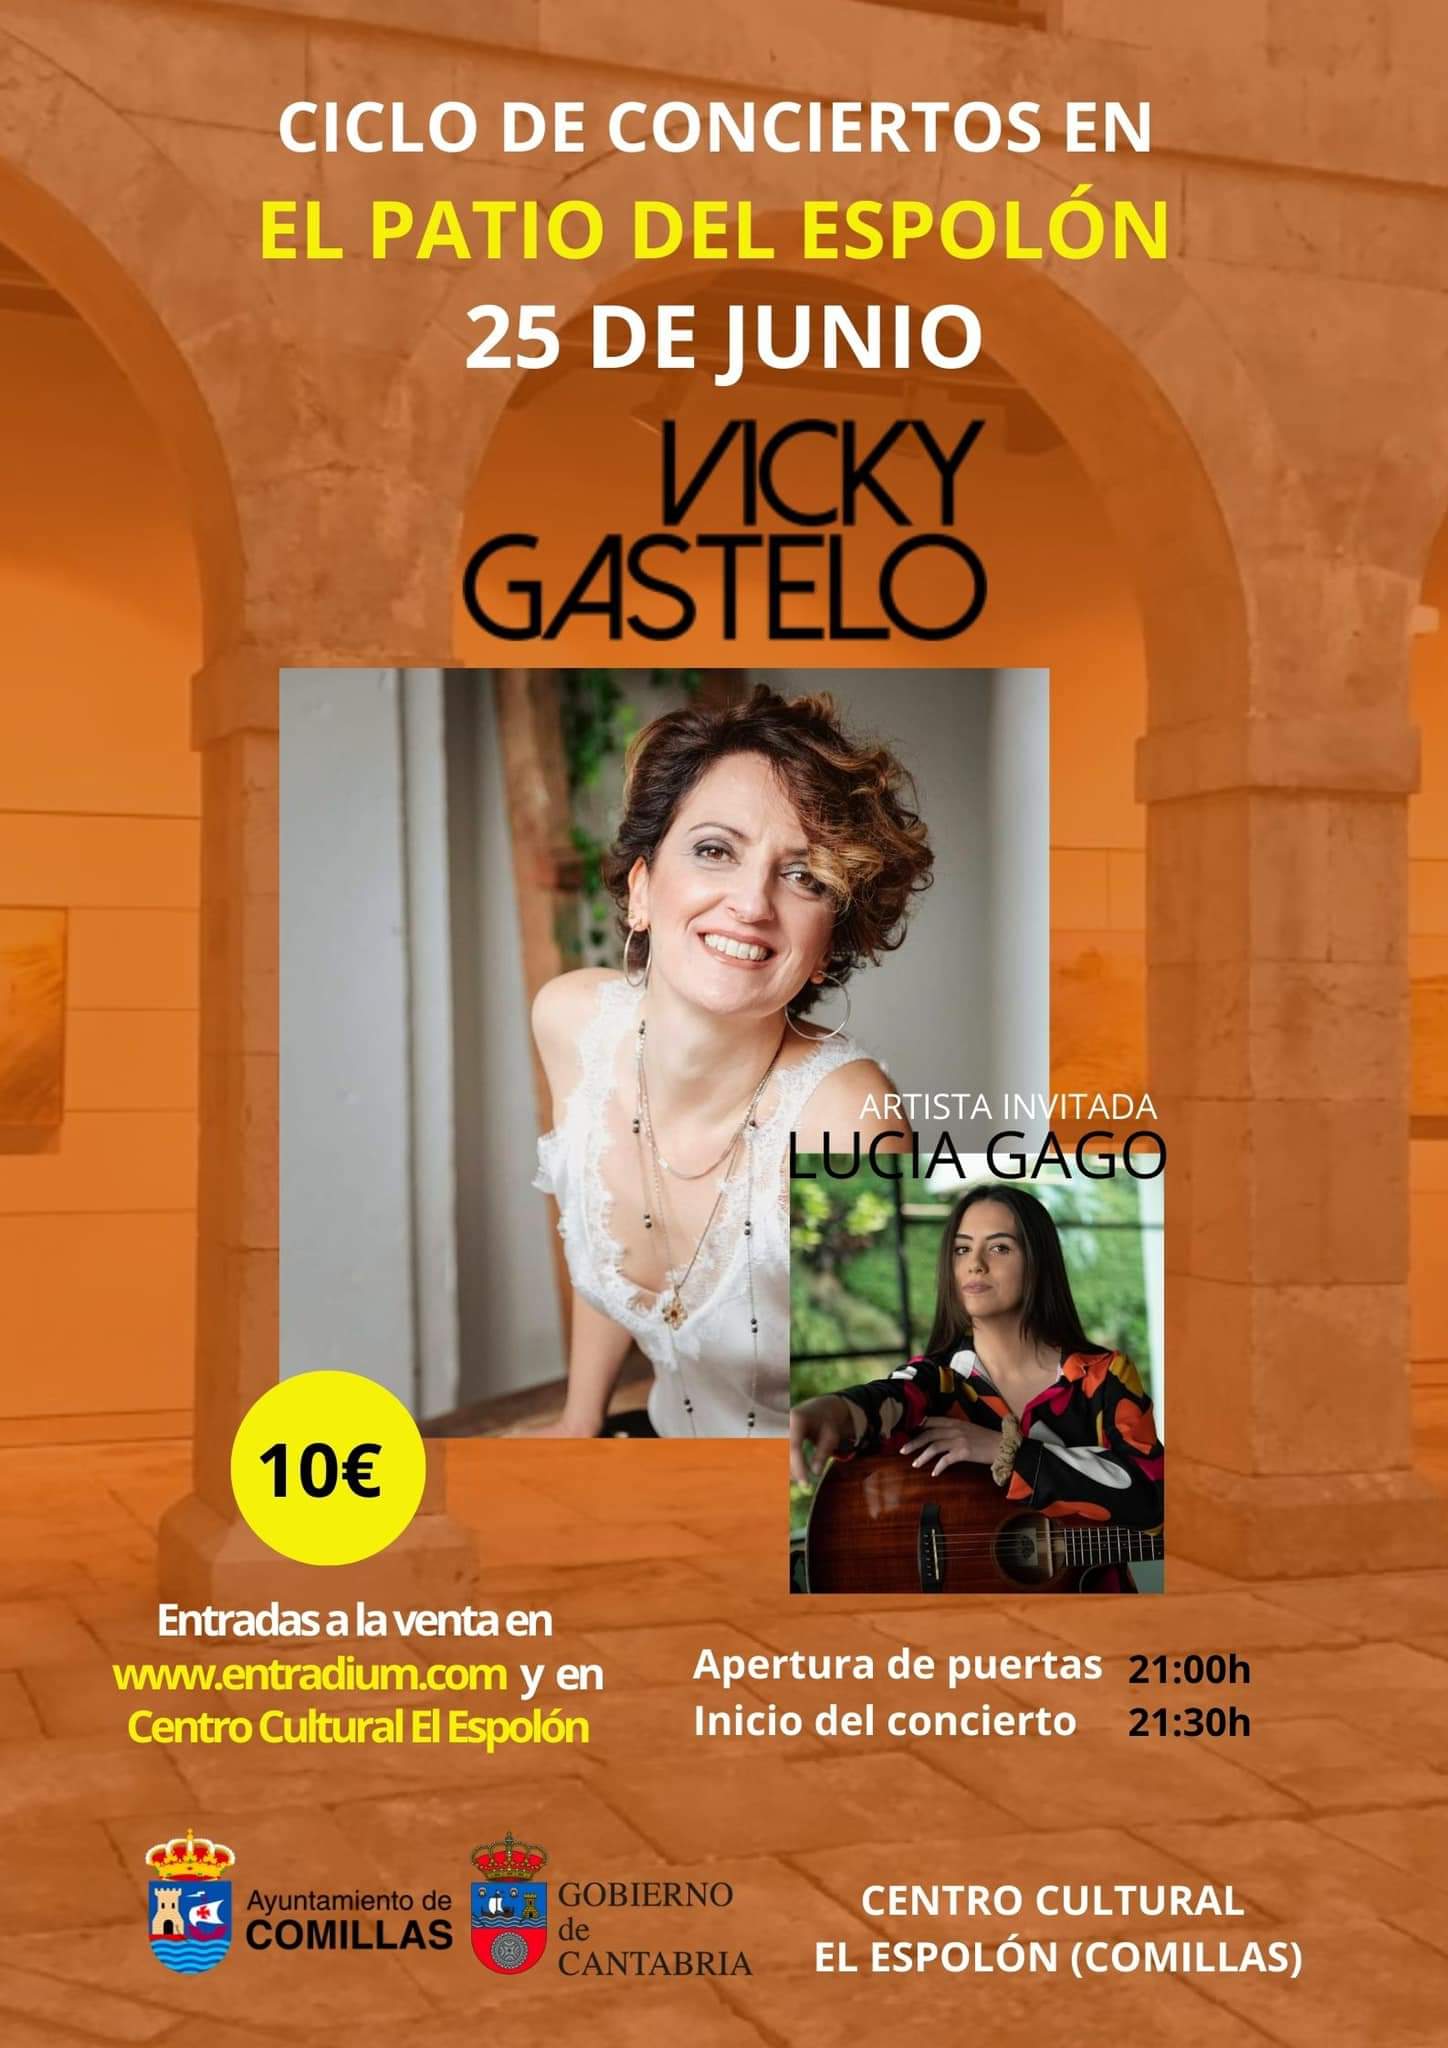 Concierto VICKY GASTELO + Artista invitada LUCIA GAGO